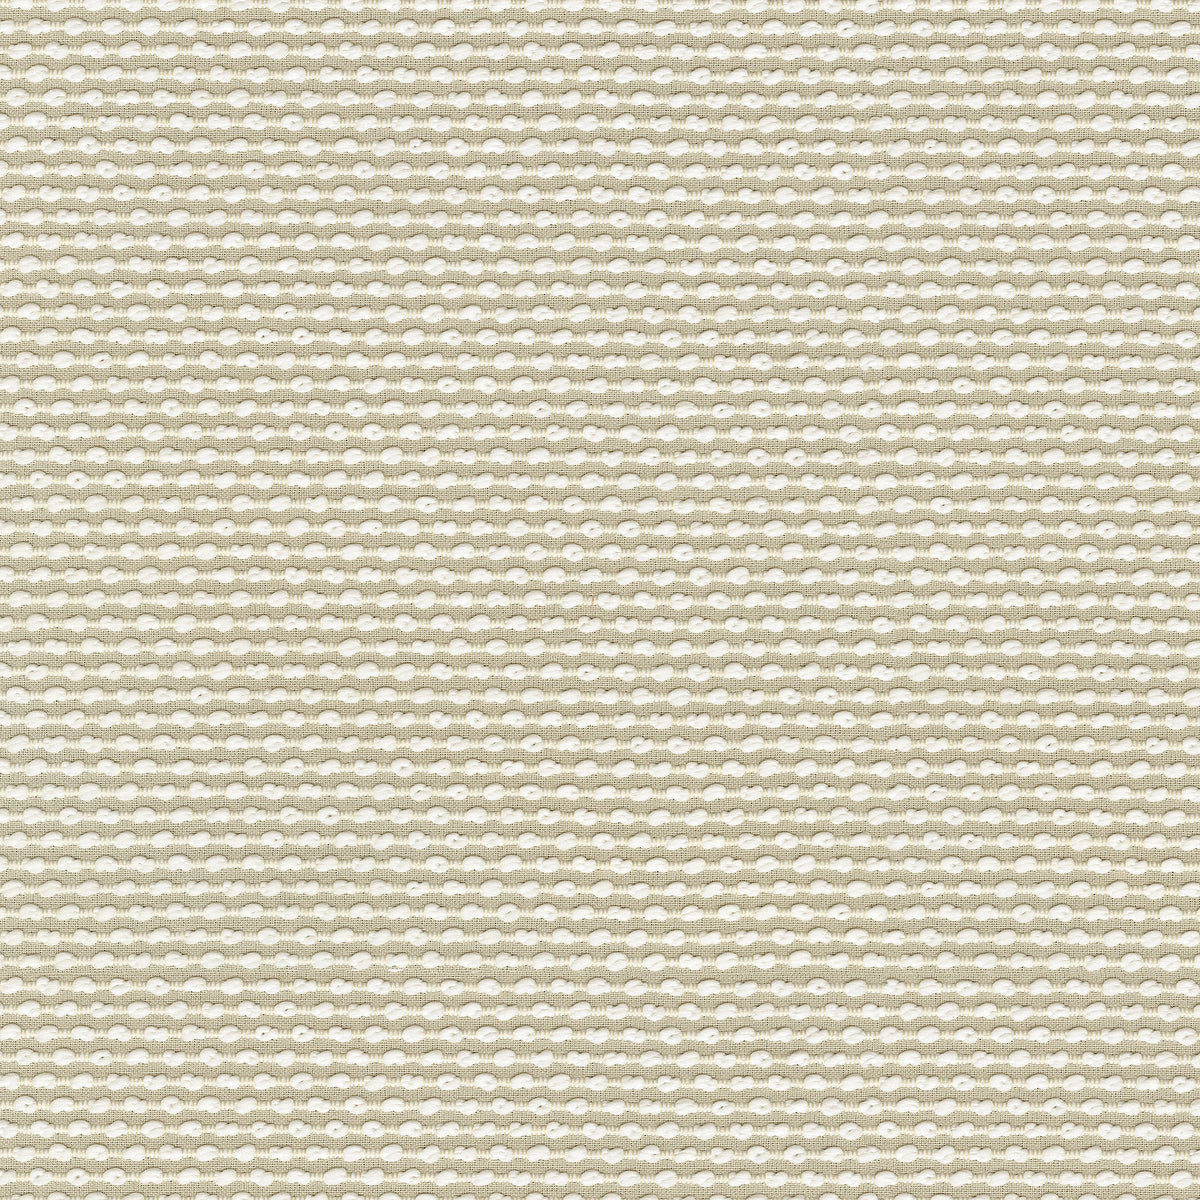 P/K Lifestyles Breuer - Cream 411511 Fabric Swatch